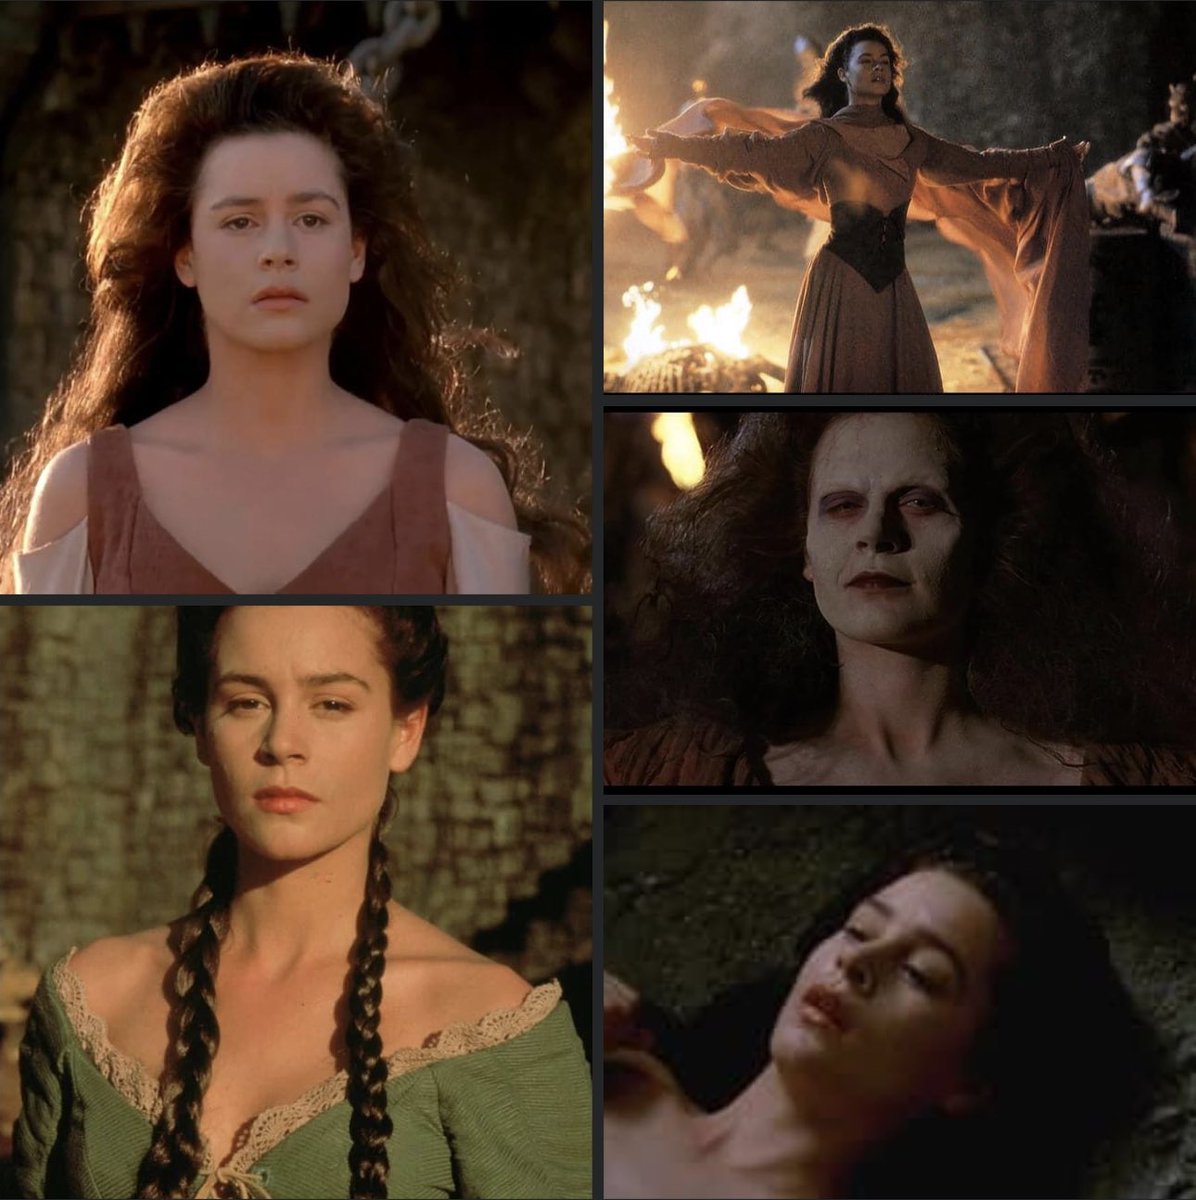 Embeth Davidtz as Sheila in Army of Darkness (1992) 😍 #EmbethDavidtz #Sheila #ArmyofDarkness #beautiful